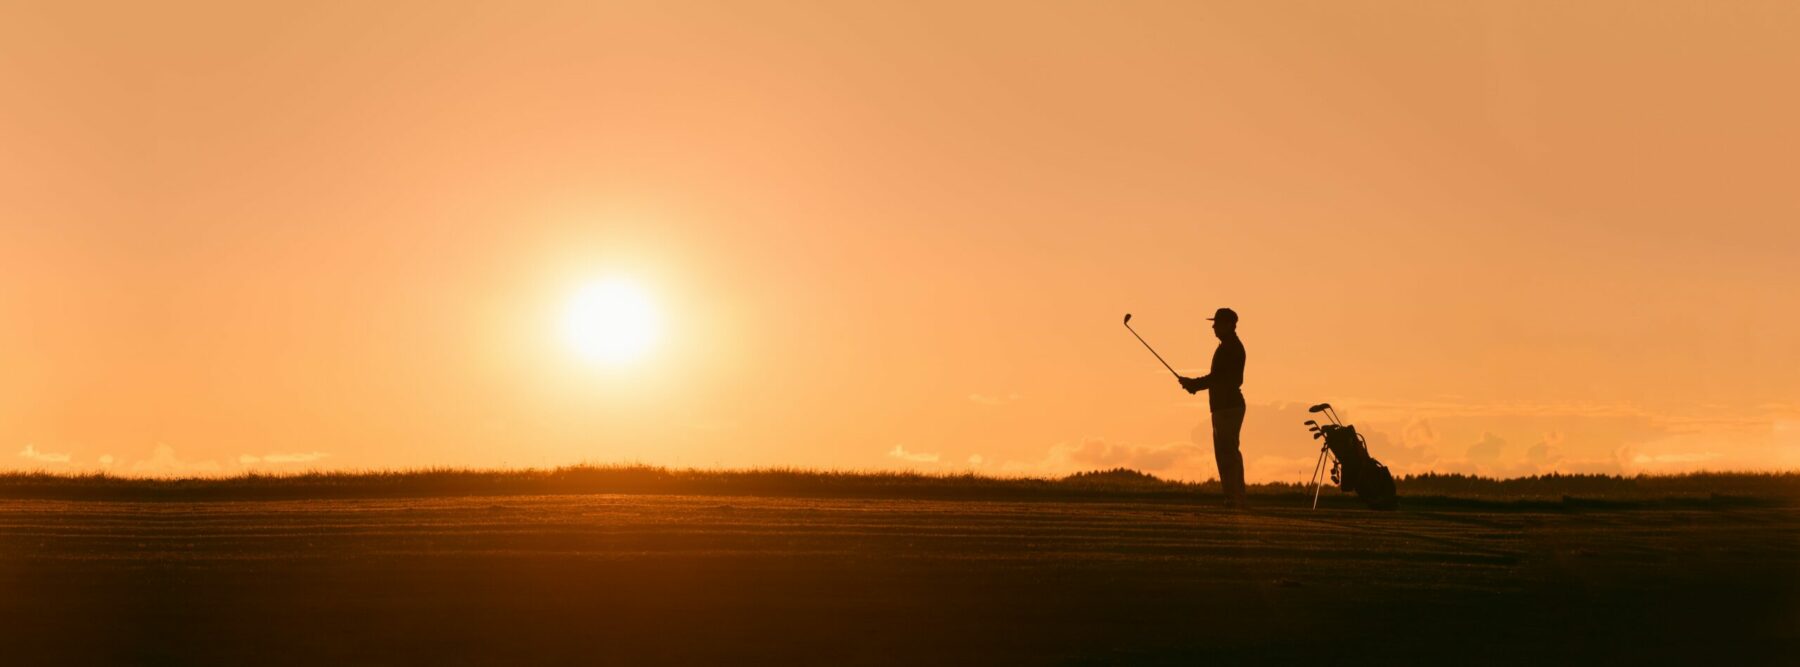 Someone playing golf at sunset.